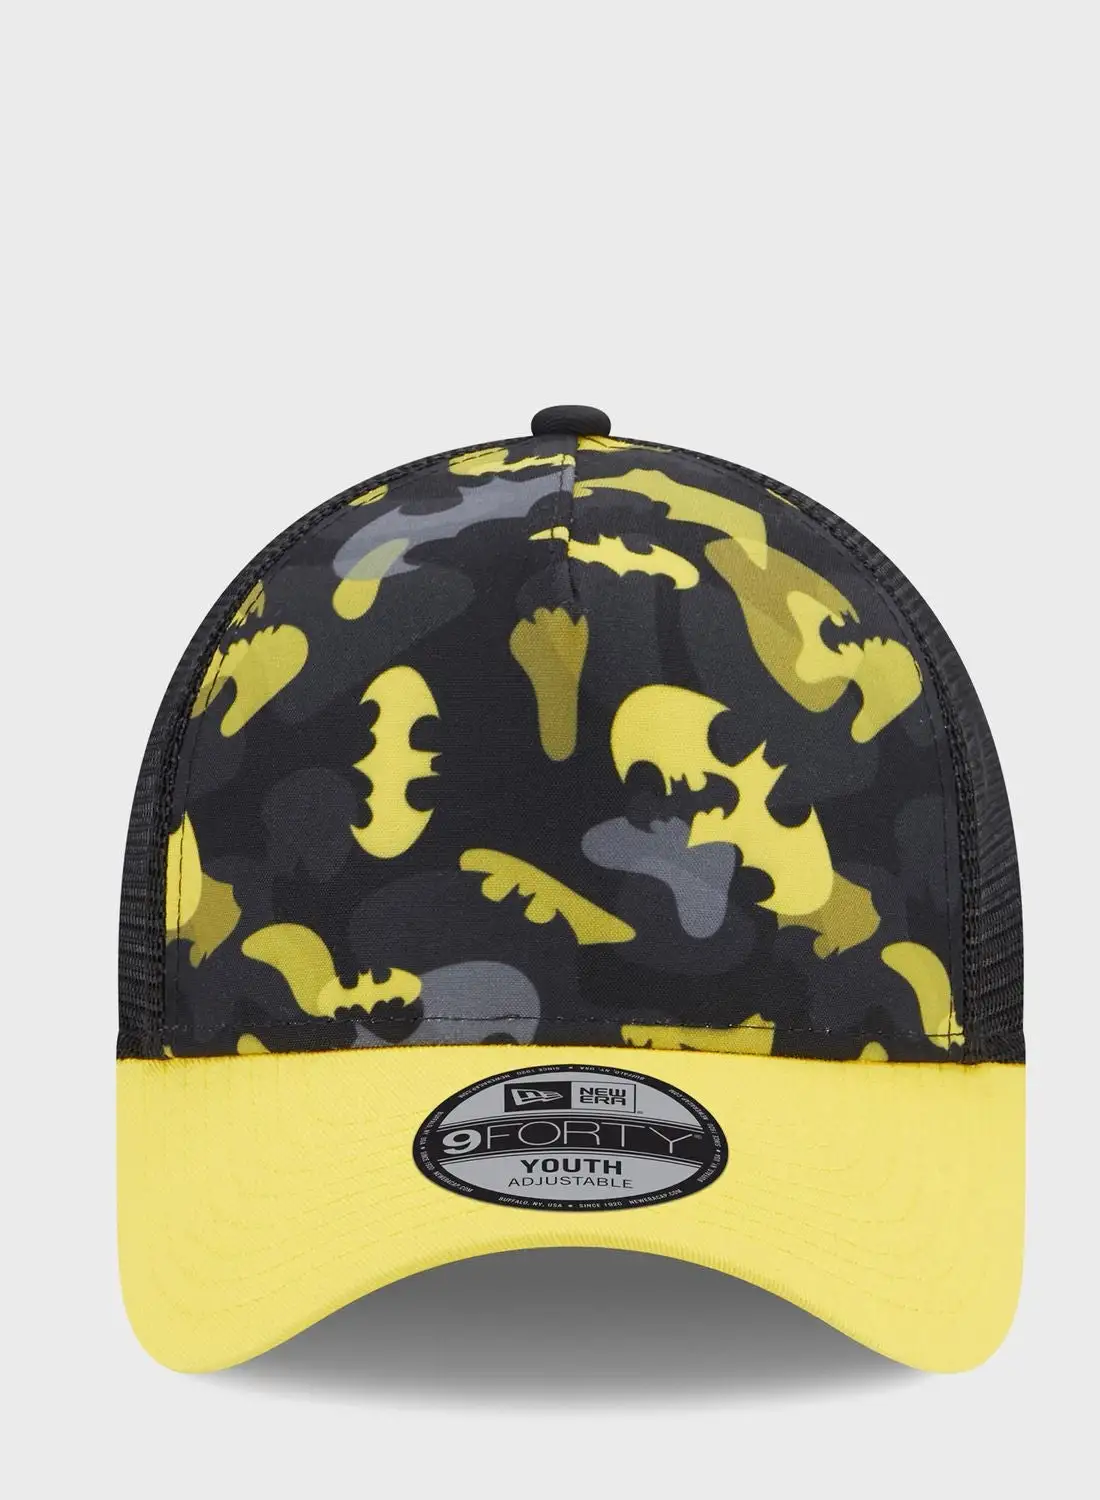 قبعة باتمان للشباب من نيو إيرا